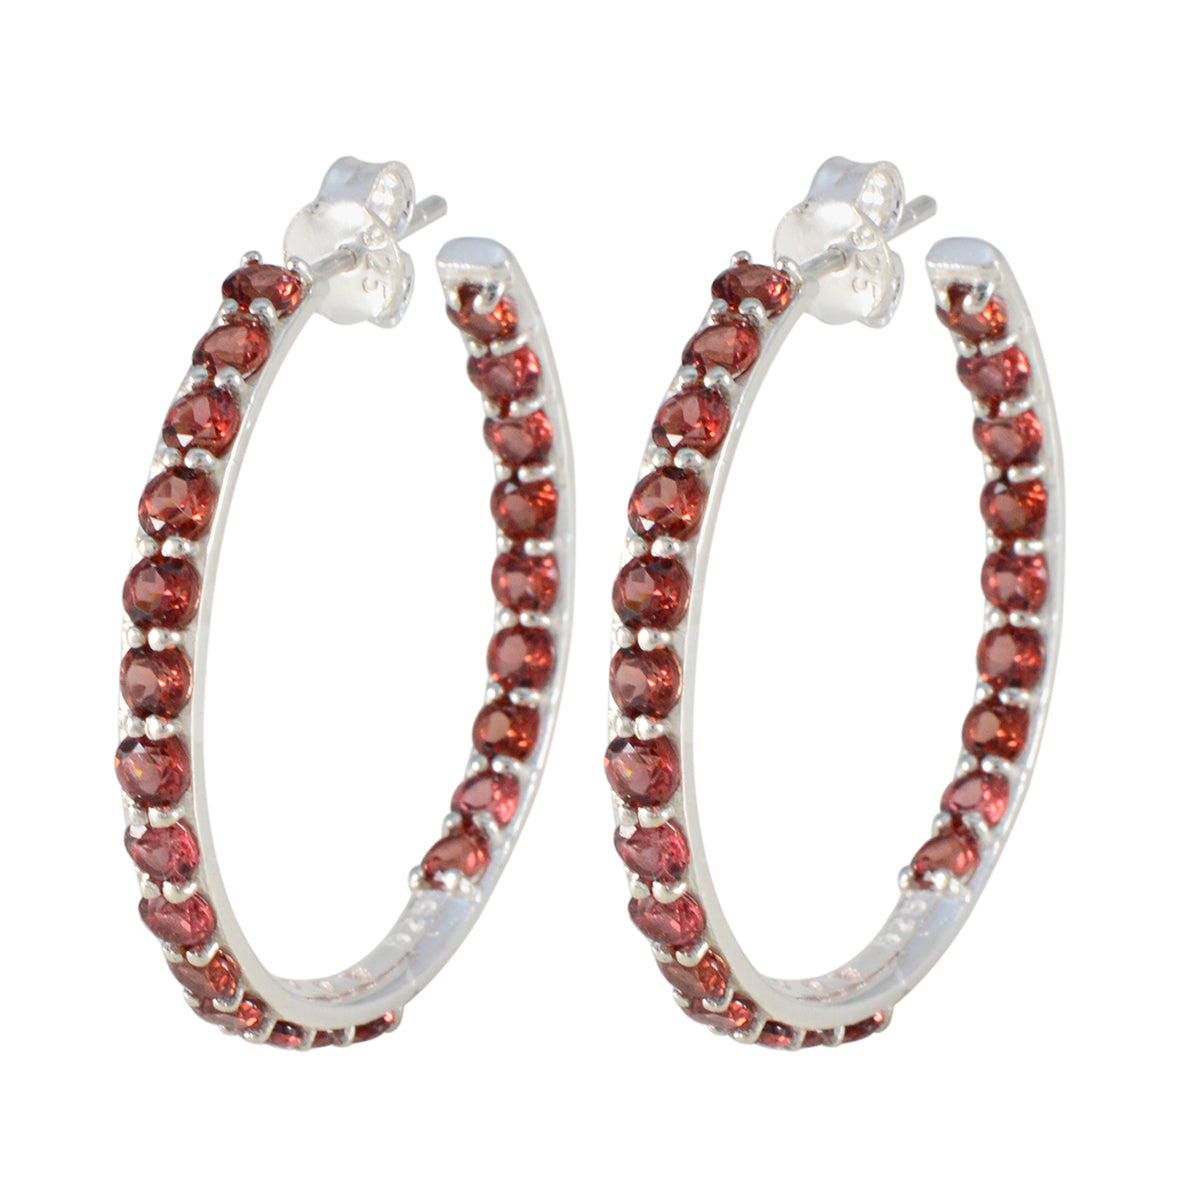 Riyo Smashing Sterling Silver Earring For Demoiselle Garnet Earring Bezel Setting Red Earring Stud Earring